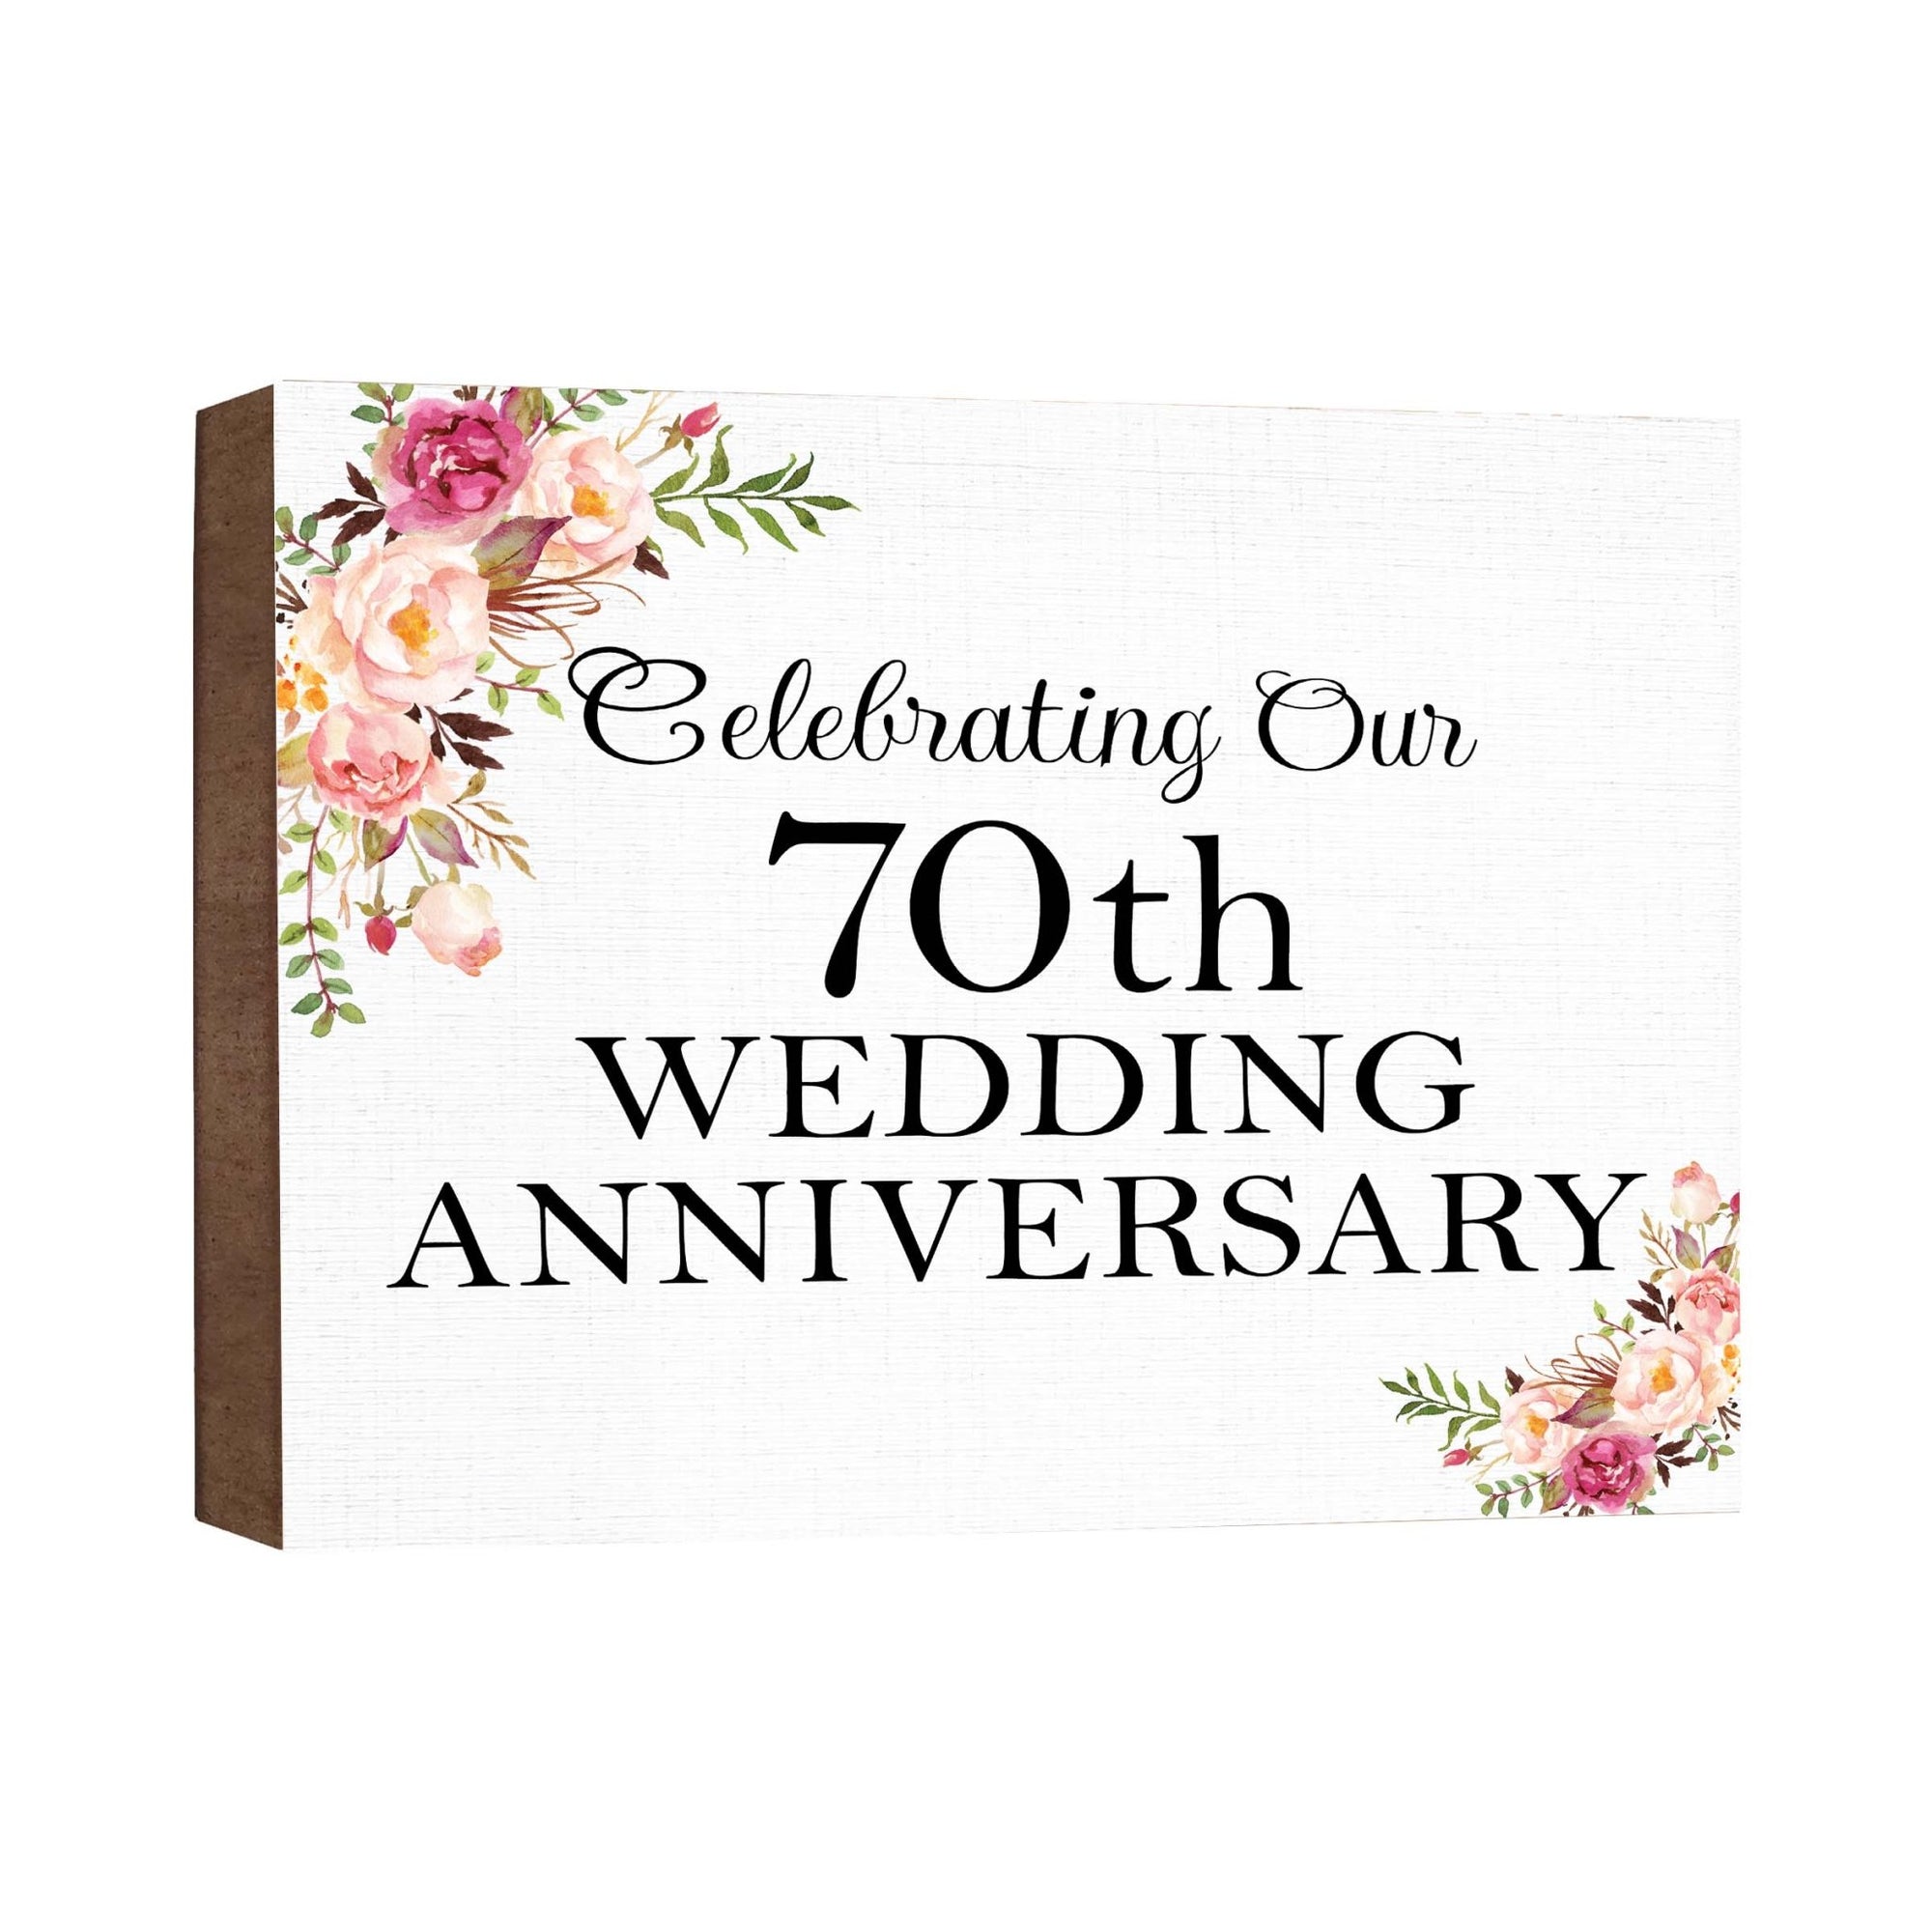 70th Wedding Anniversary Wall Plaque - Celebrating - LifeSong Milestones